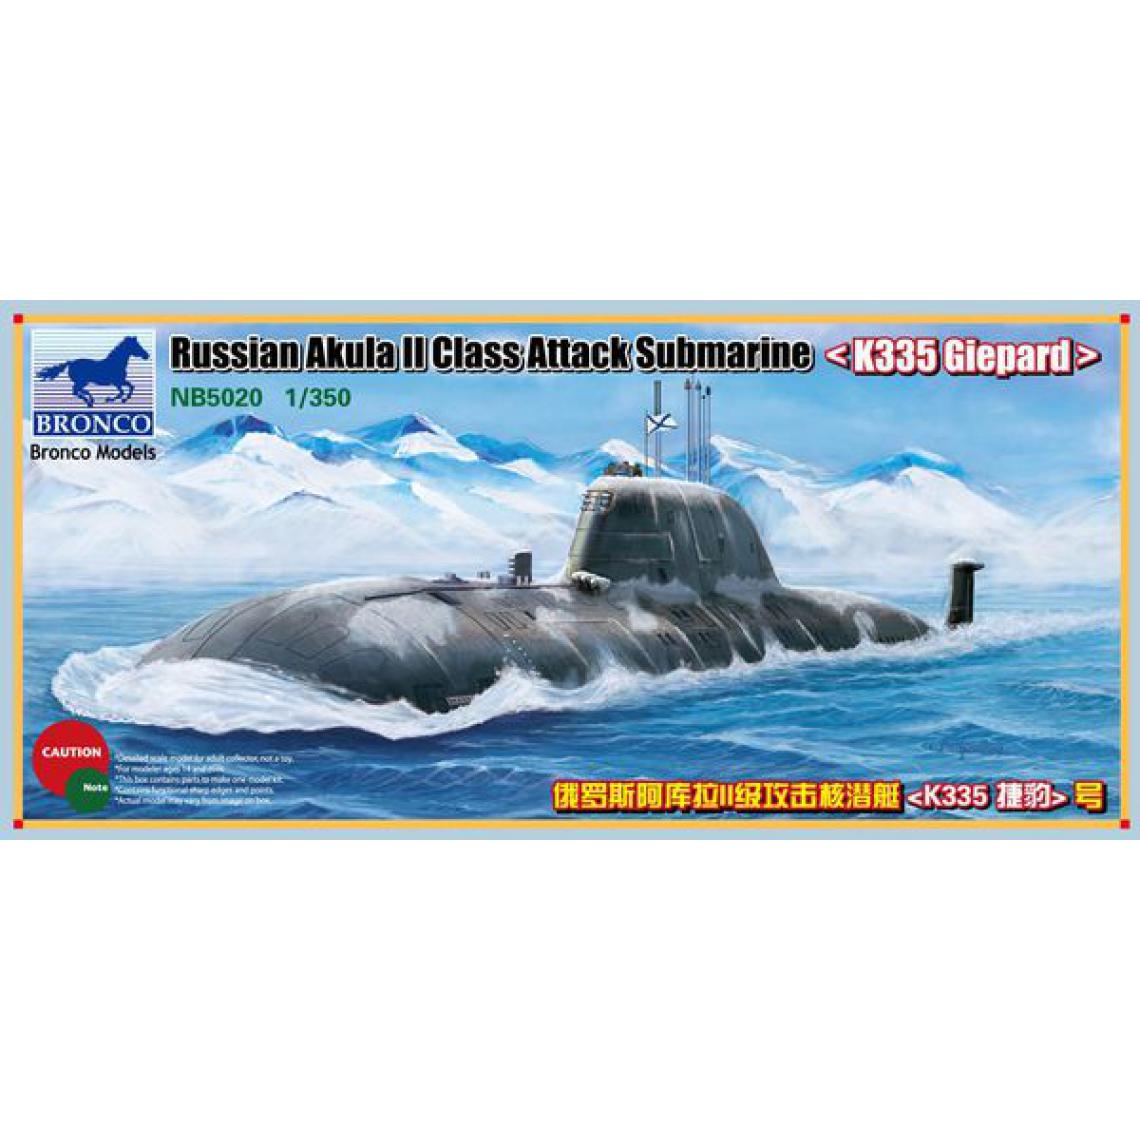 Bronco Models - Russian Akula II Class Attack Submarine `K335 Giepard'- 1:350e - Bronco Models - Accessoires et pièces